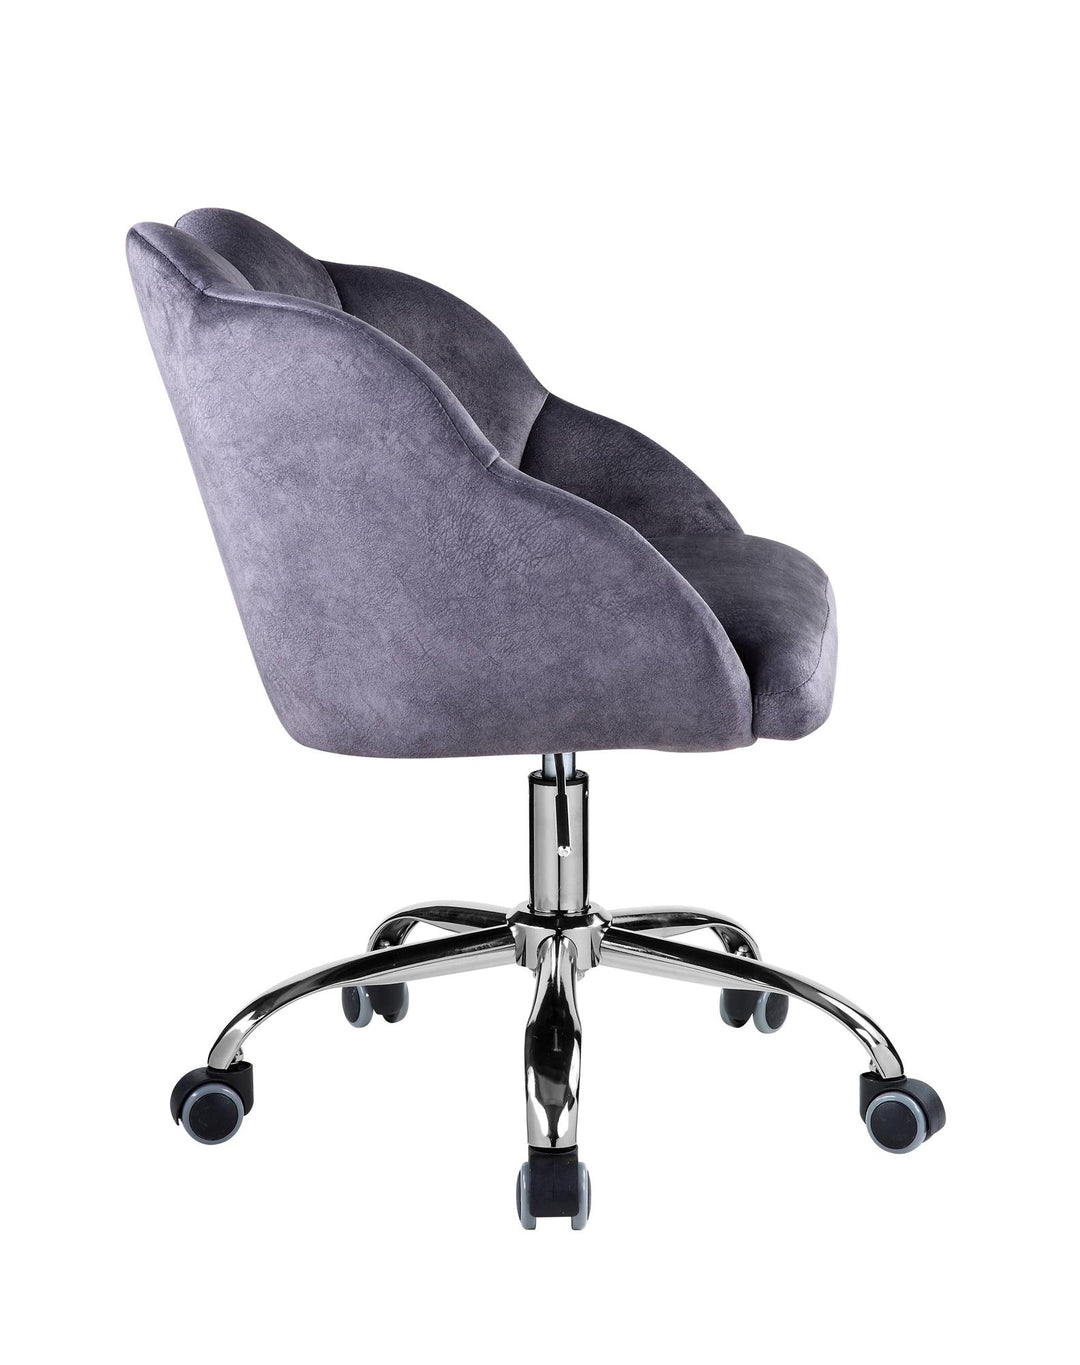 Velvet Adjustable Office Chair with Swivel seat - Dark Gray